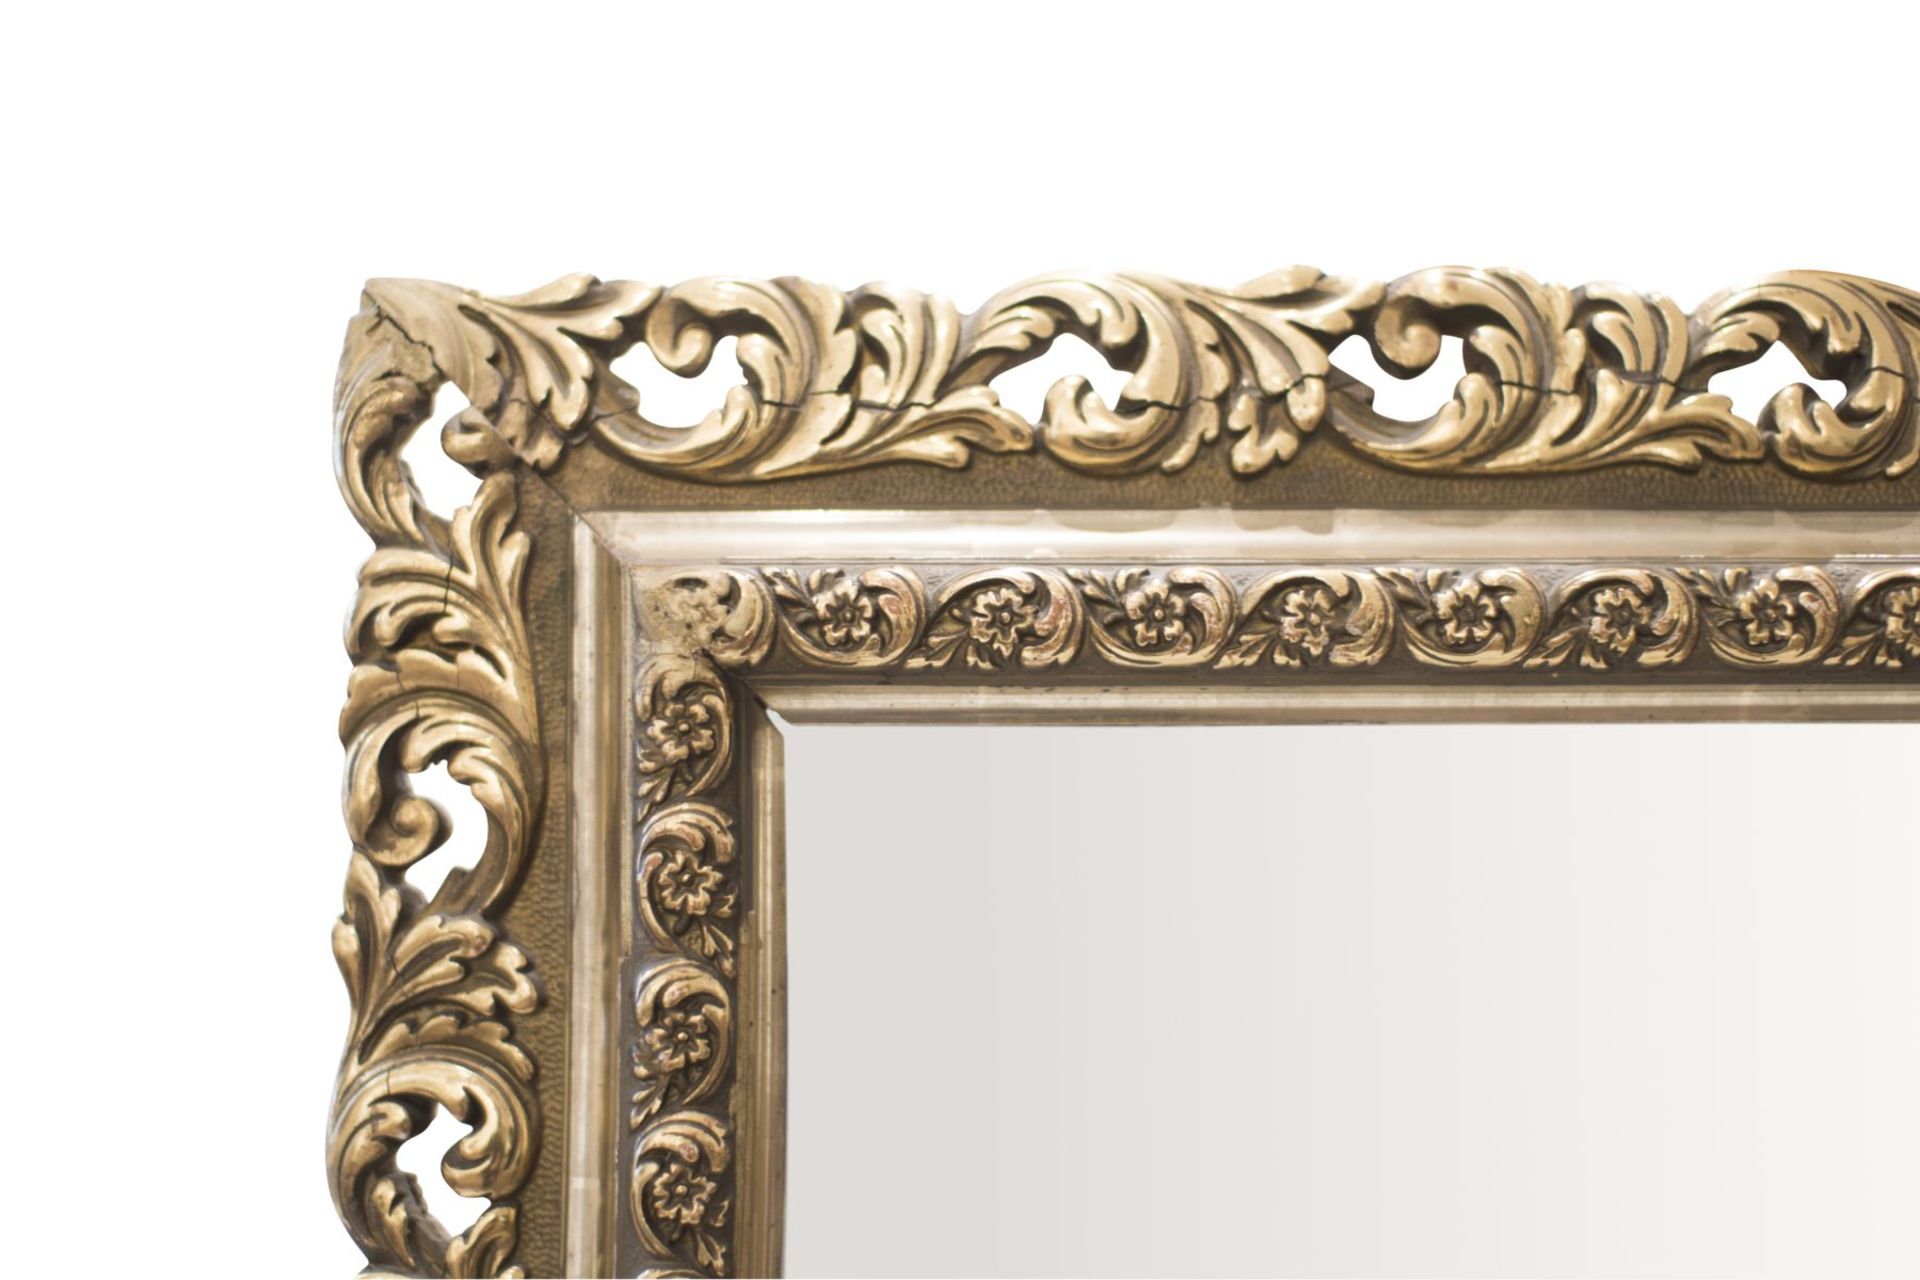 Decorative mirror - Image 3 of 5